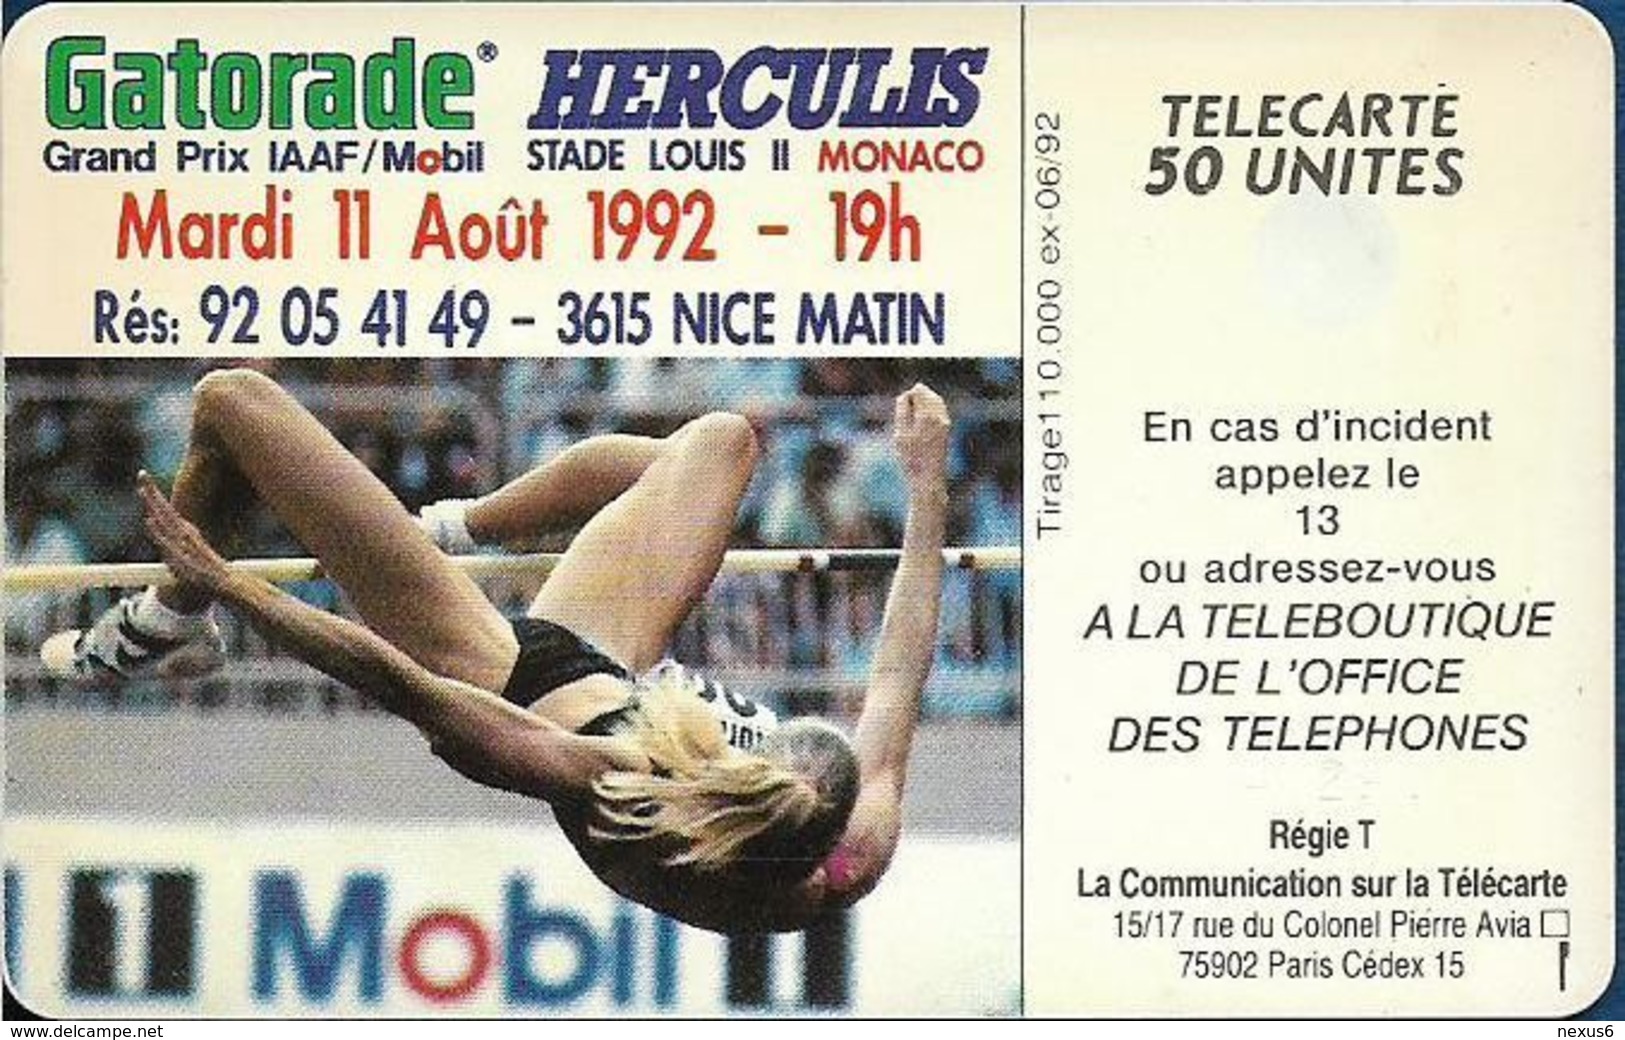 Monaco - MF24 - Herculis '92 - Cn. 41298, SC5 SB, 06.1992, 50Units, 110.000ex, Used - Monace